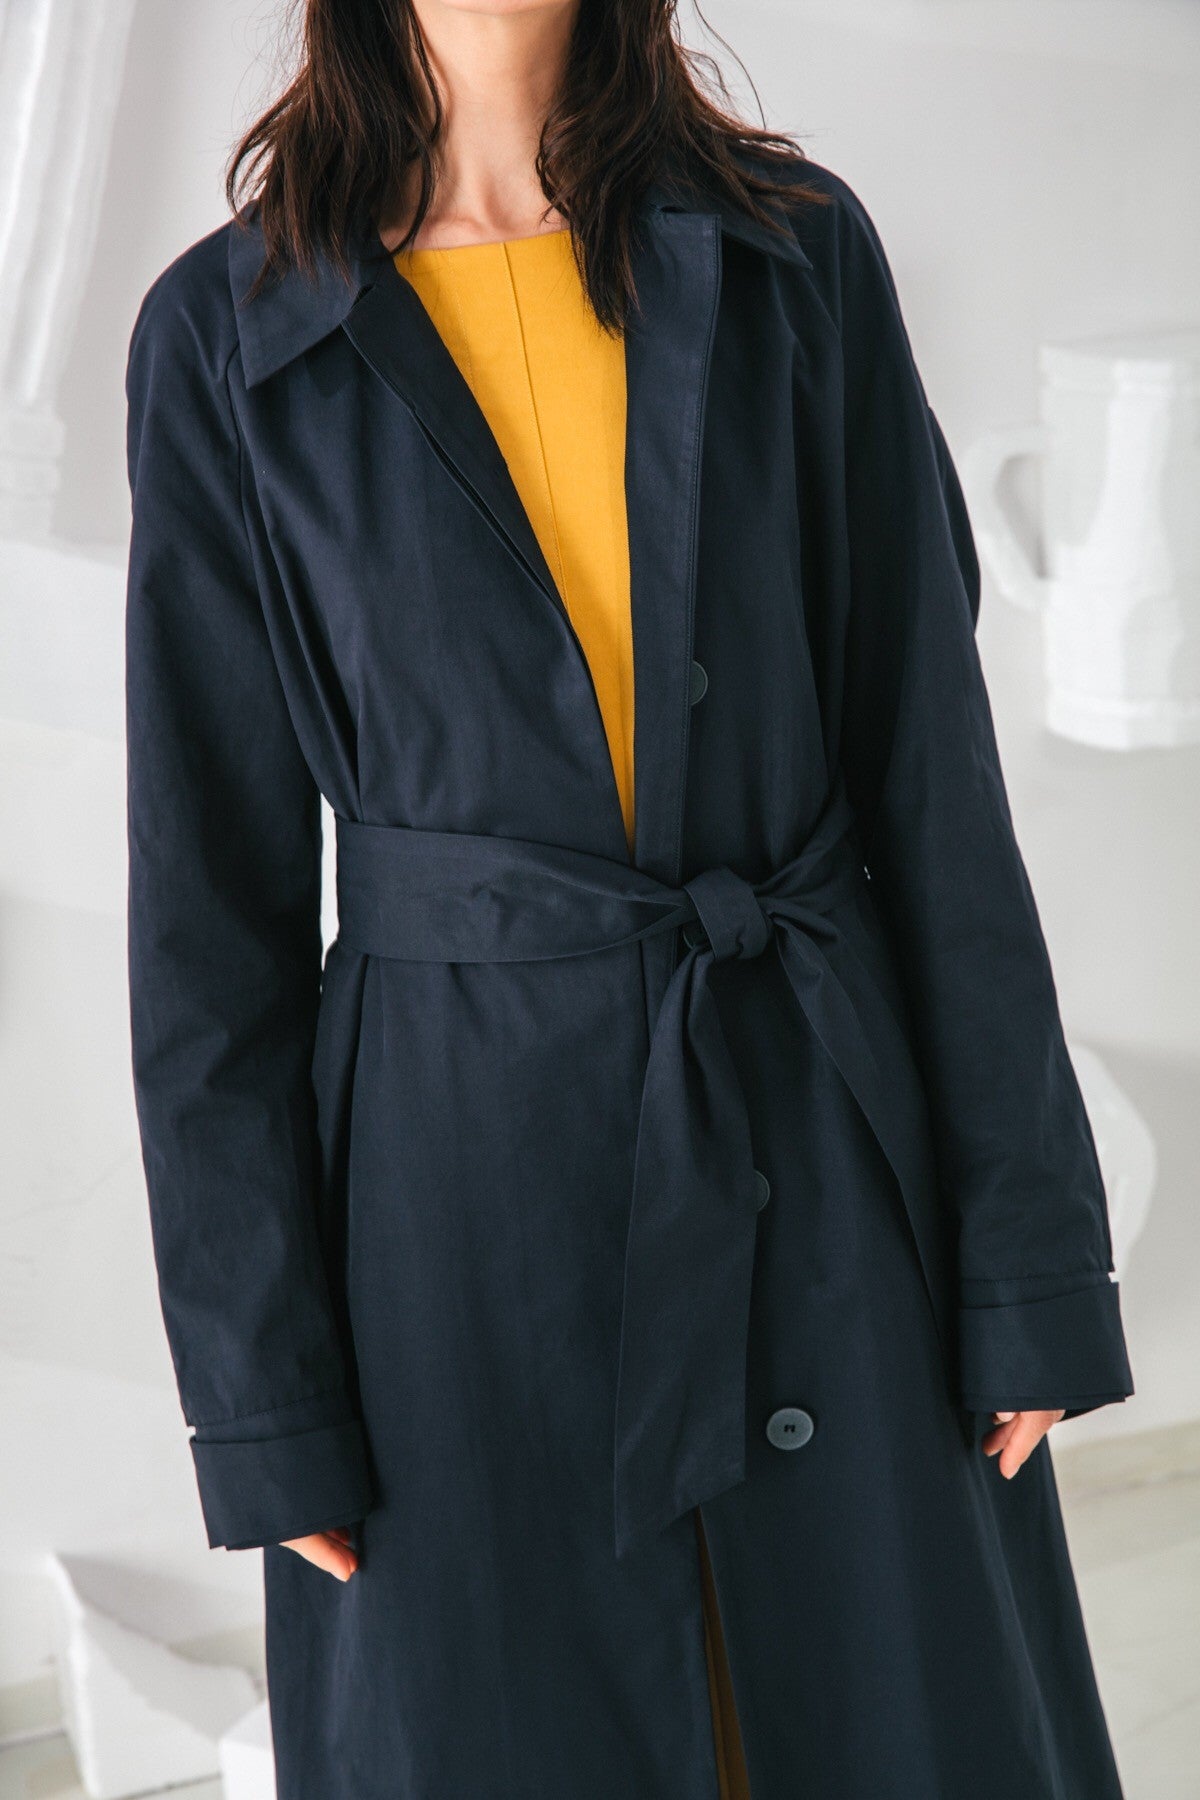 SKYE San Francisco SF shop ethical modern minimalist quality women clothing fashion Coraline Trench Coat blue 5